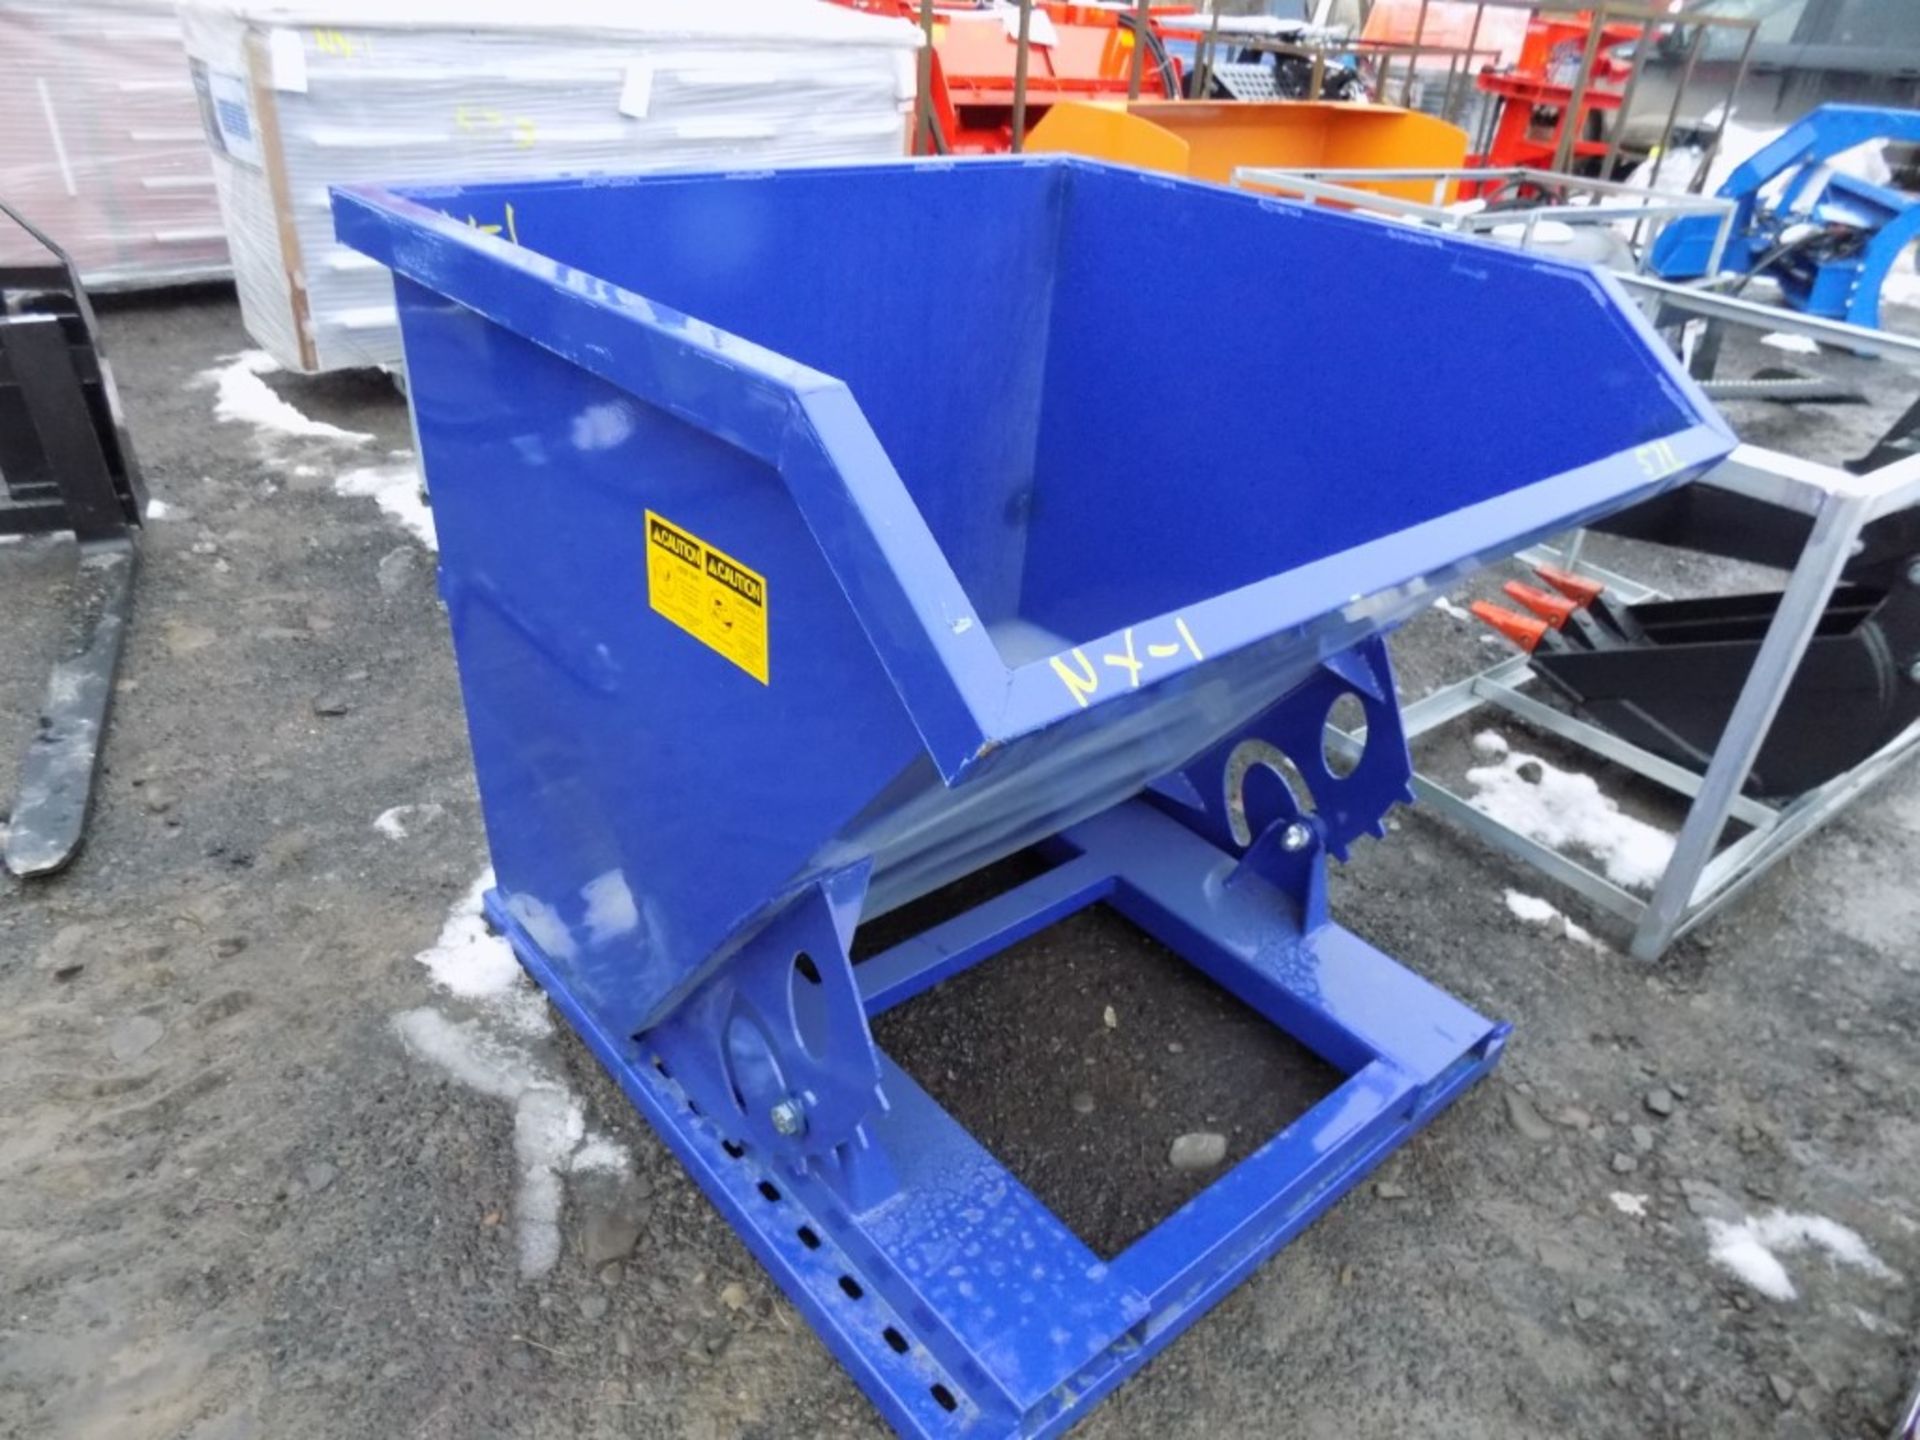 New Garbage Tipper for Forklift, Blue